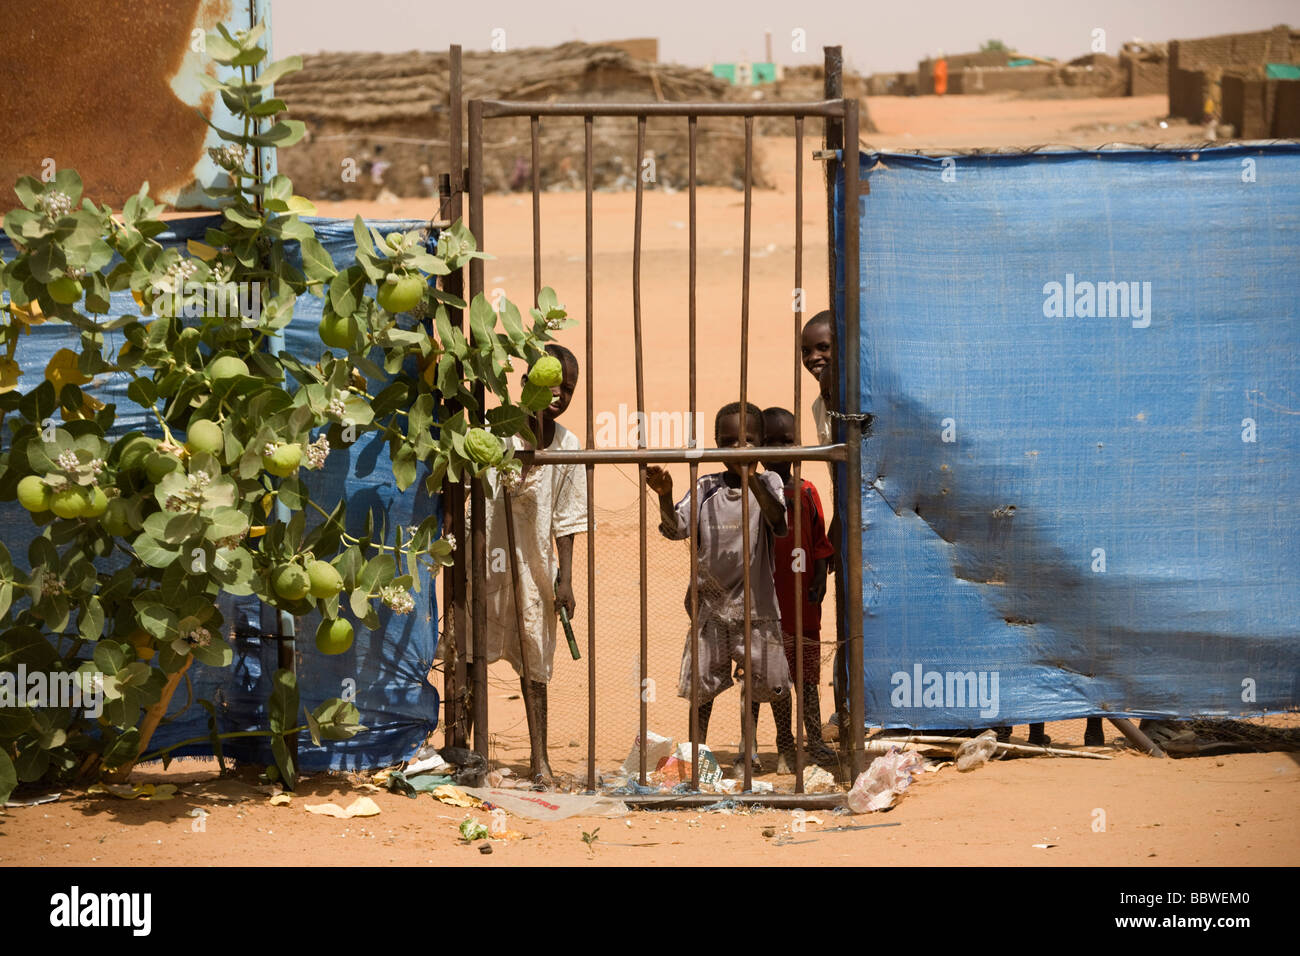 Children play hide and seek in the 4 sq km Abu Shouk refugee camp in Al Fasher, North Darfur, Sudan. Stock Photo